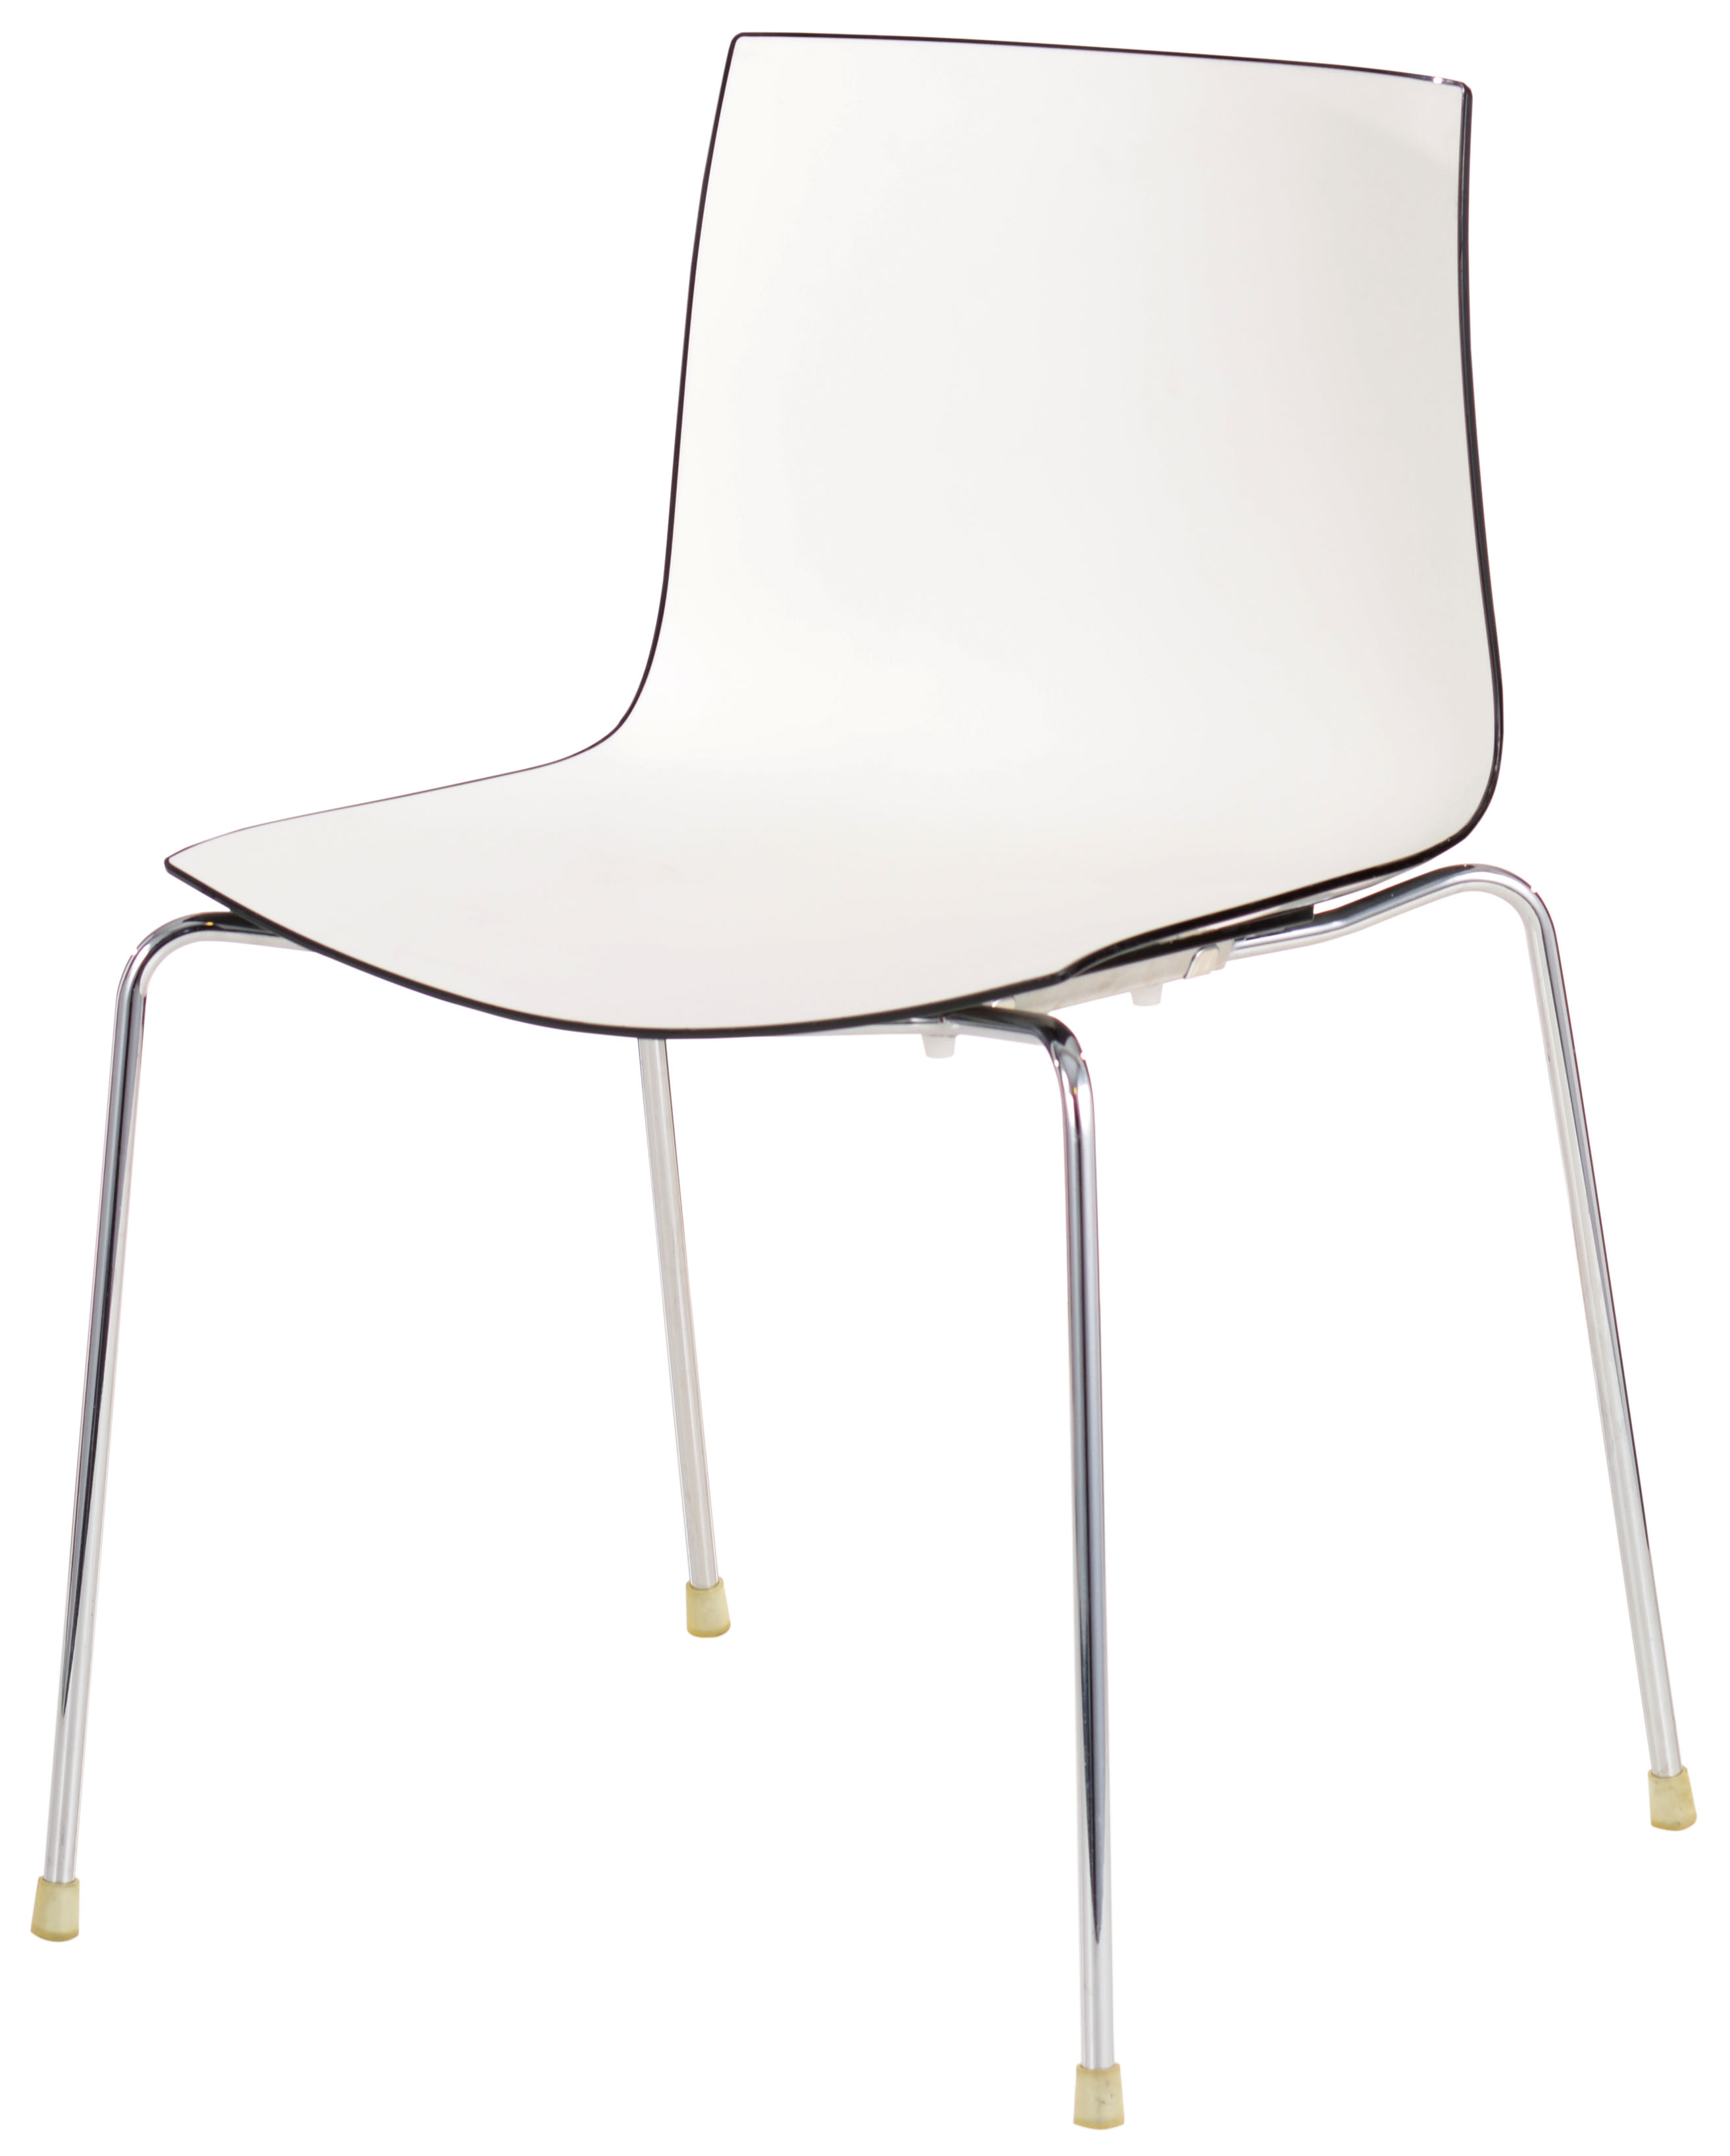 Designer-Stuhl Catifa 46: Filigran für Indoor & Outdoor (Arper, Lievore Altherr Molina, 2-farbig, kombinierbar per Reihenverbinder, stapelbar)